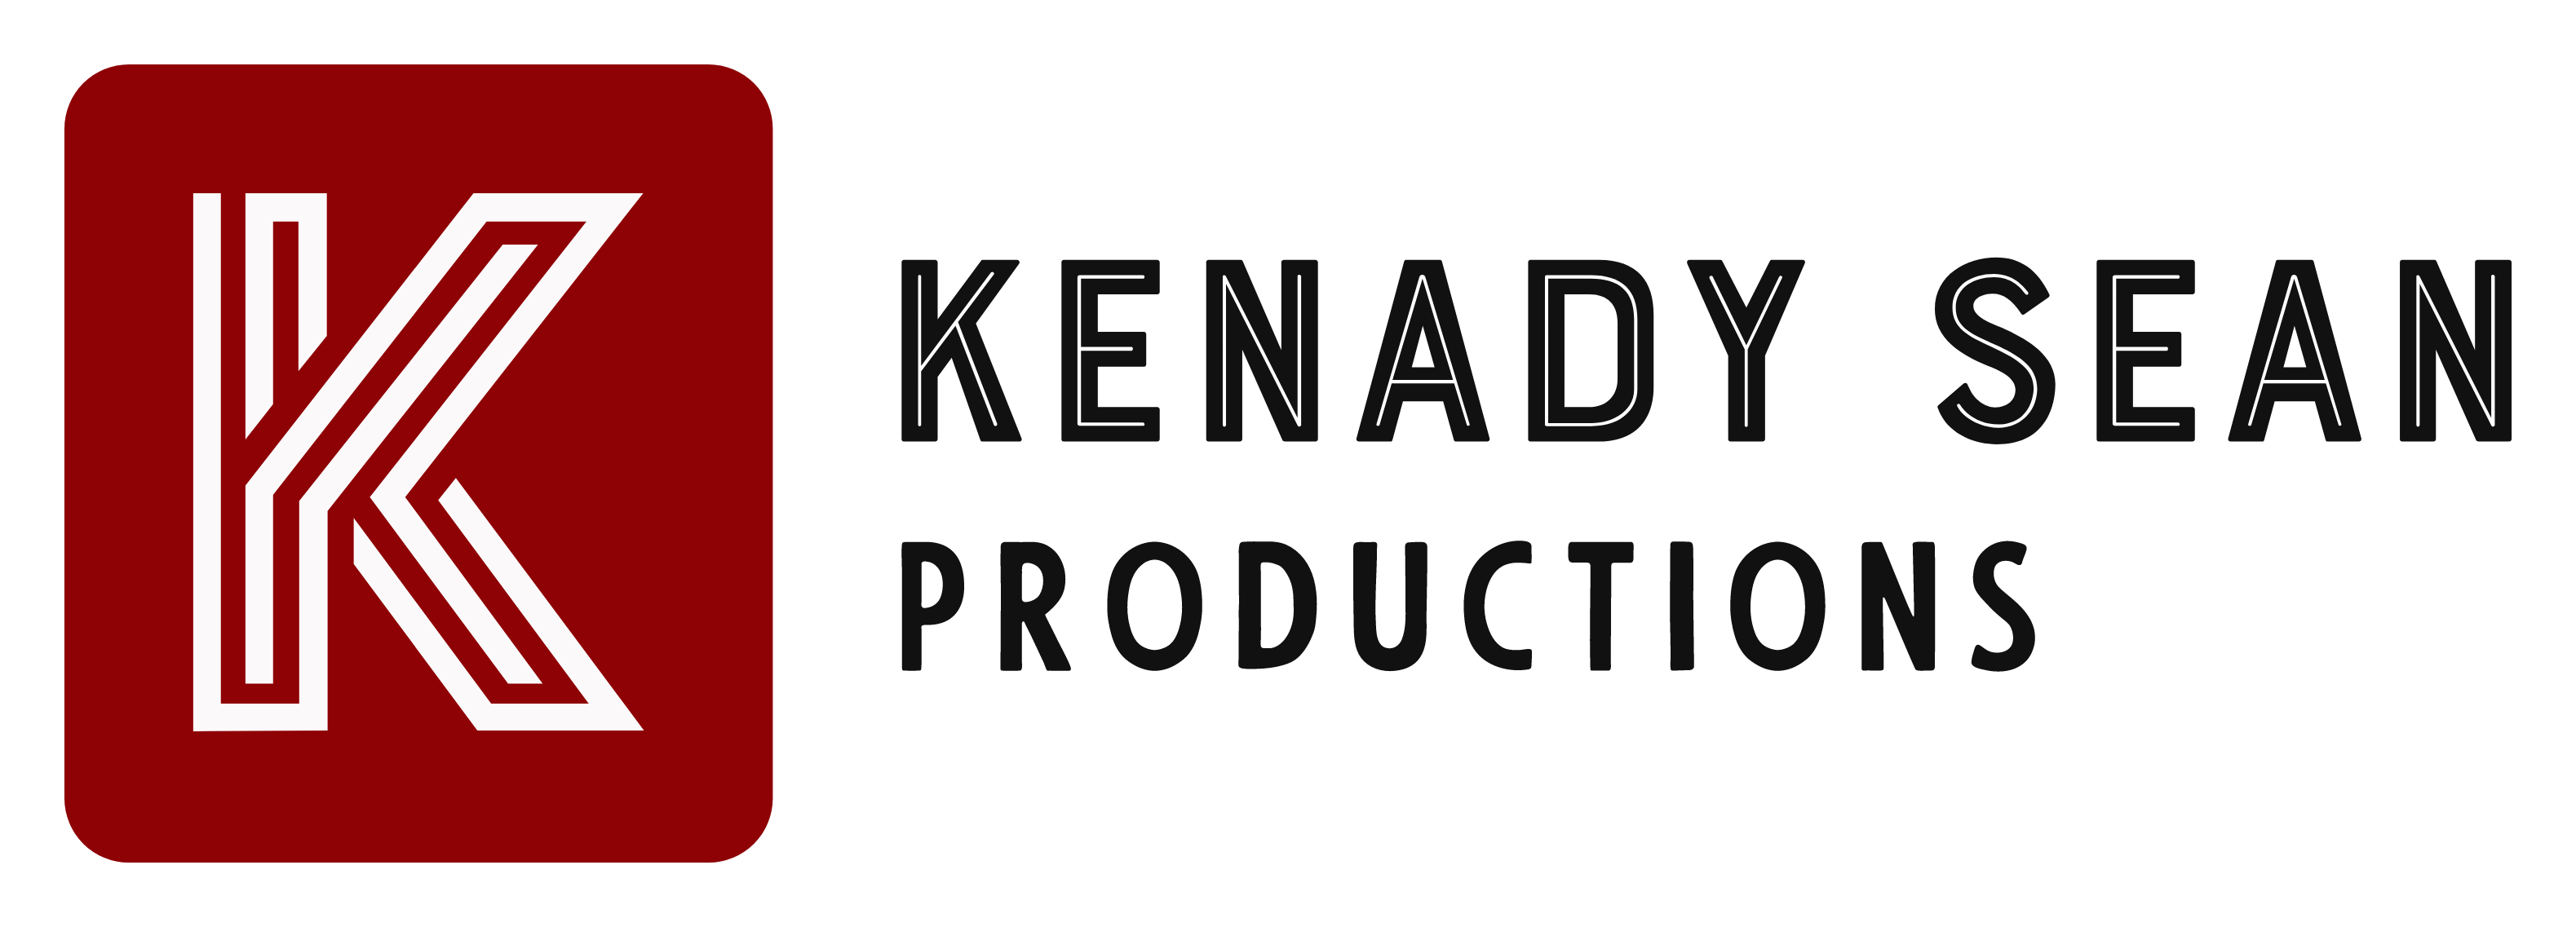 Kenady Sean Productions